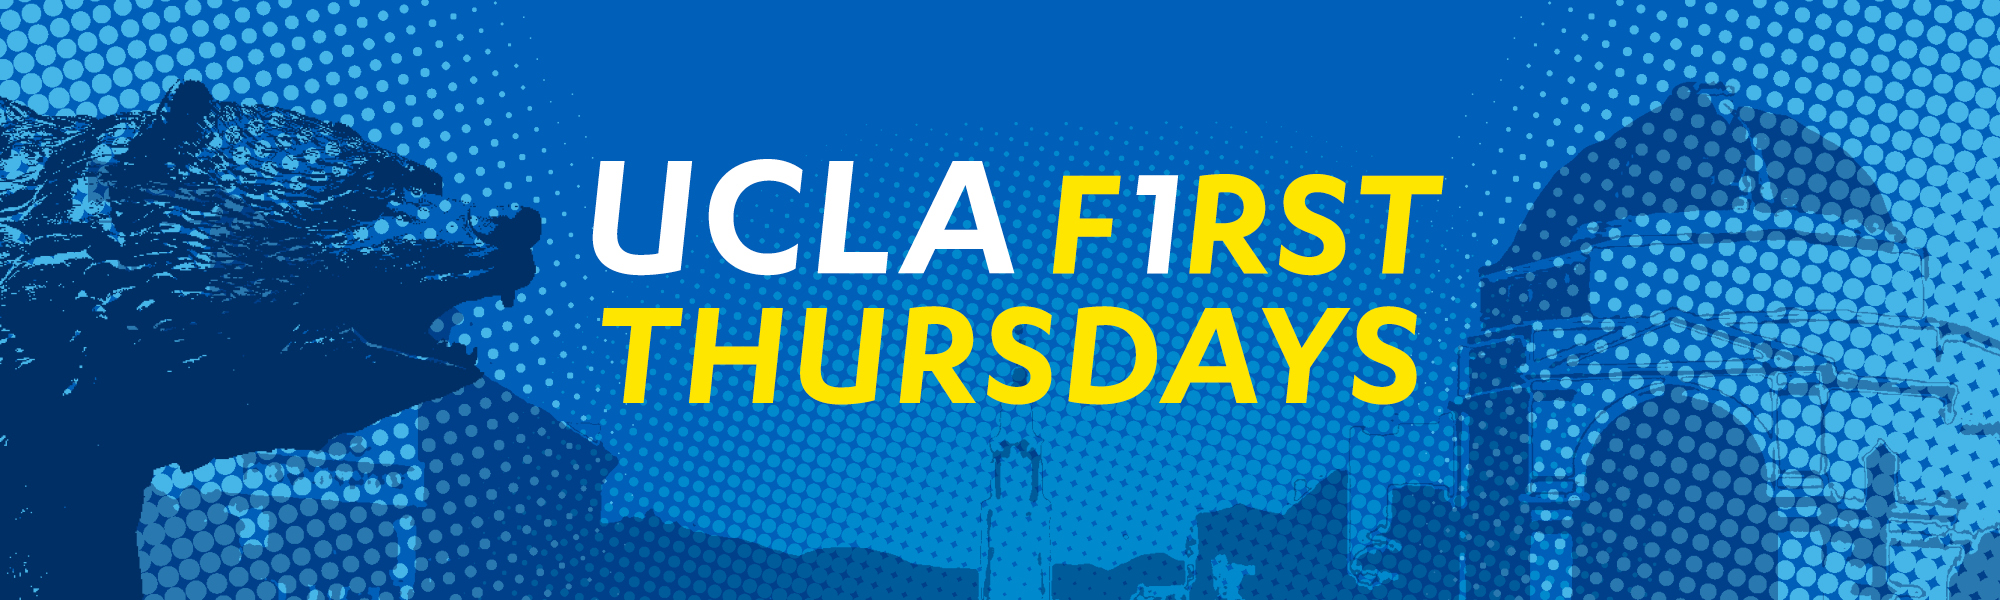 UCLA First Thursday